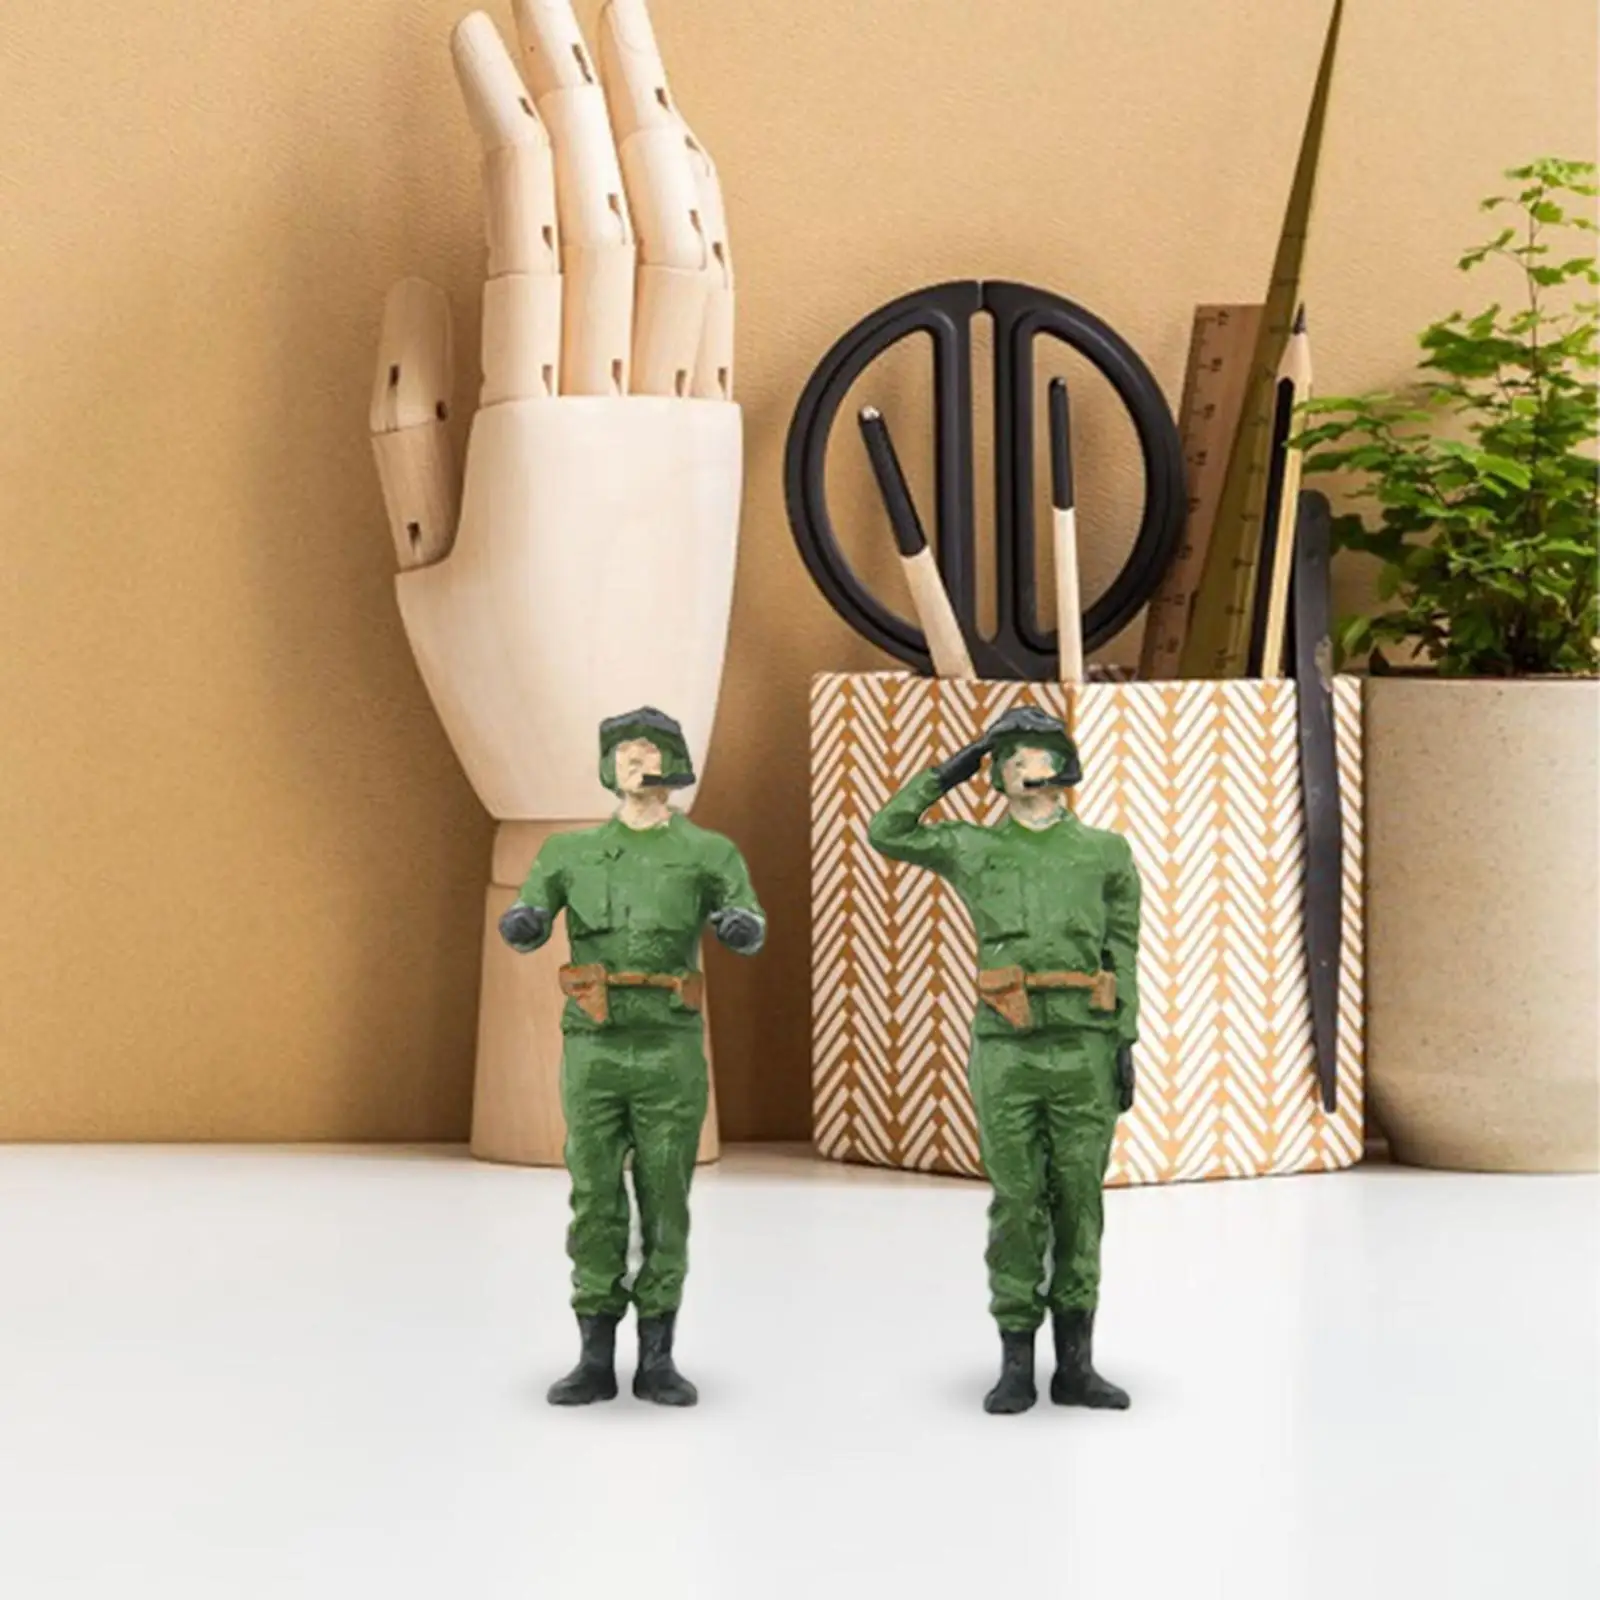 2Pcs 1/72 Scale Miniature Figure Action Figures Soldiers Toys for Architecture Model Dollhouse Accessories Miniature Scenes